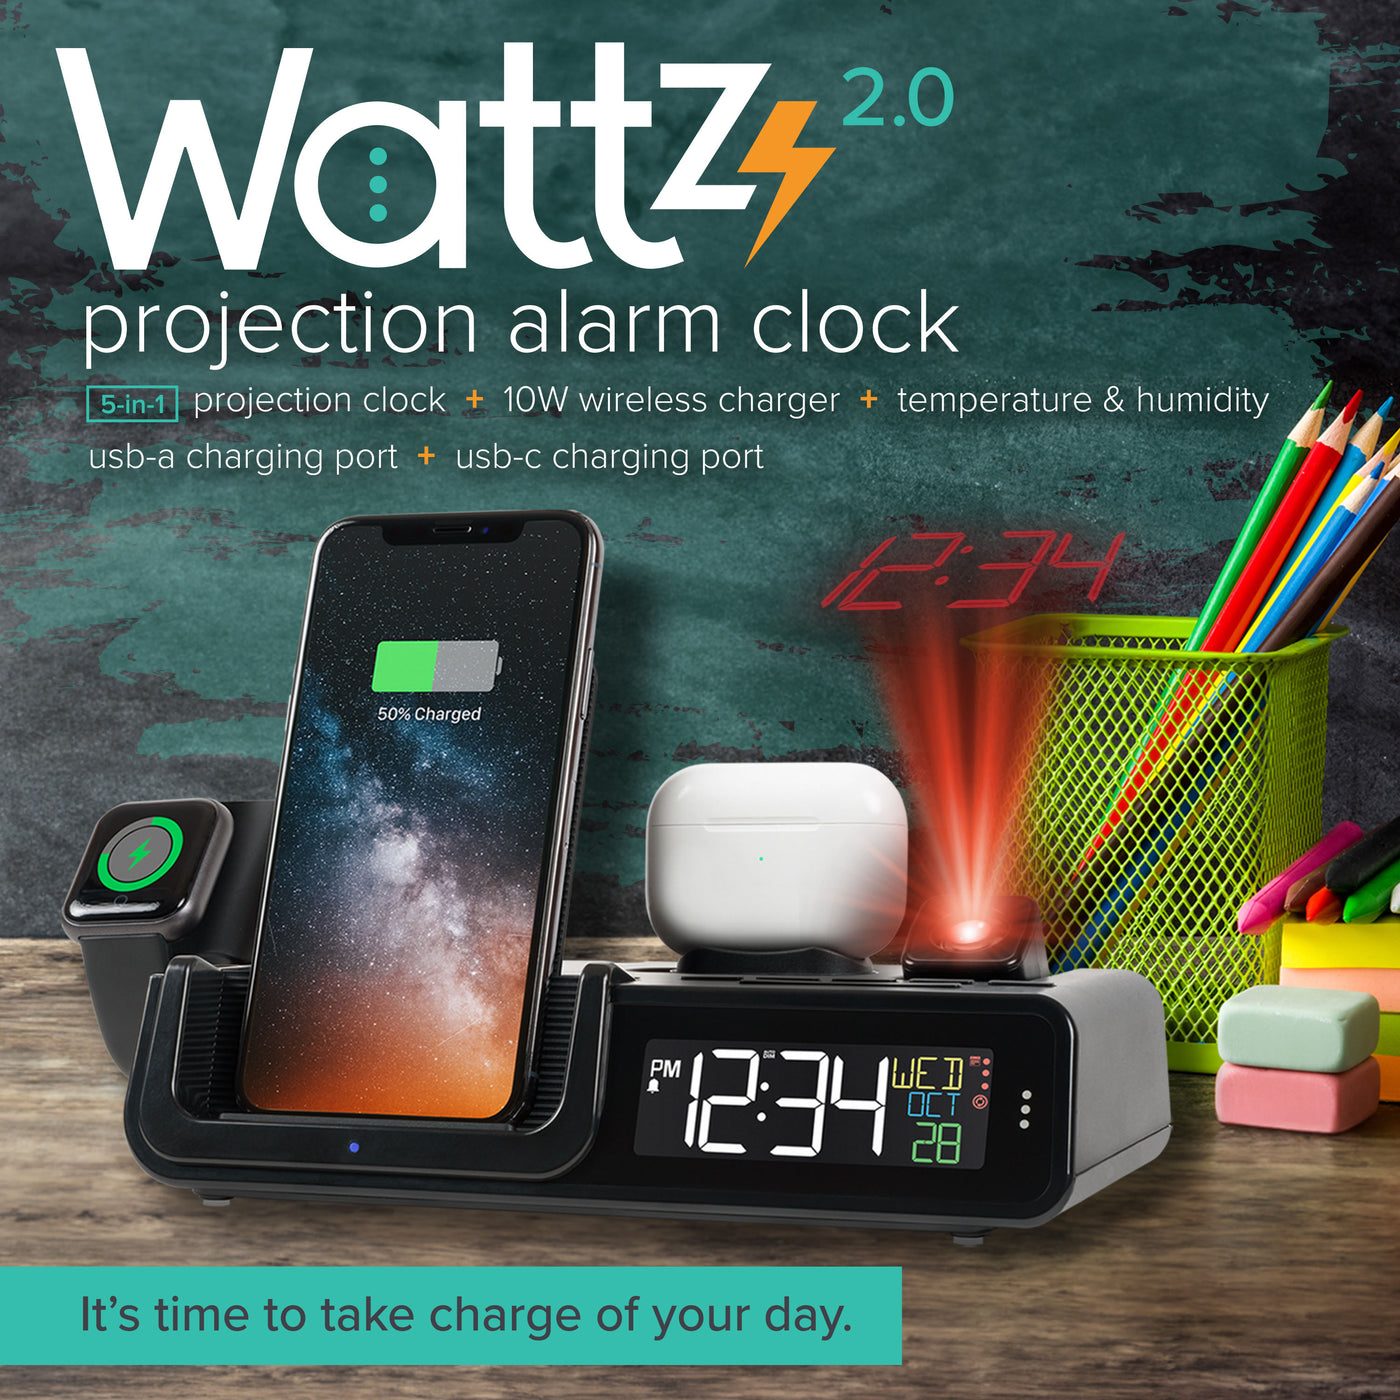 C75709 projection alarm clock 1